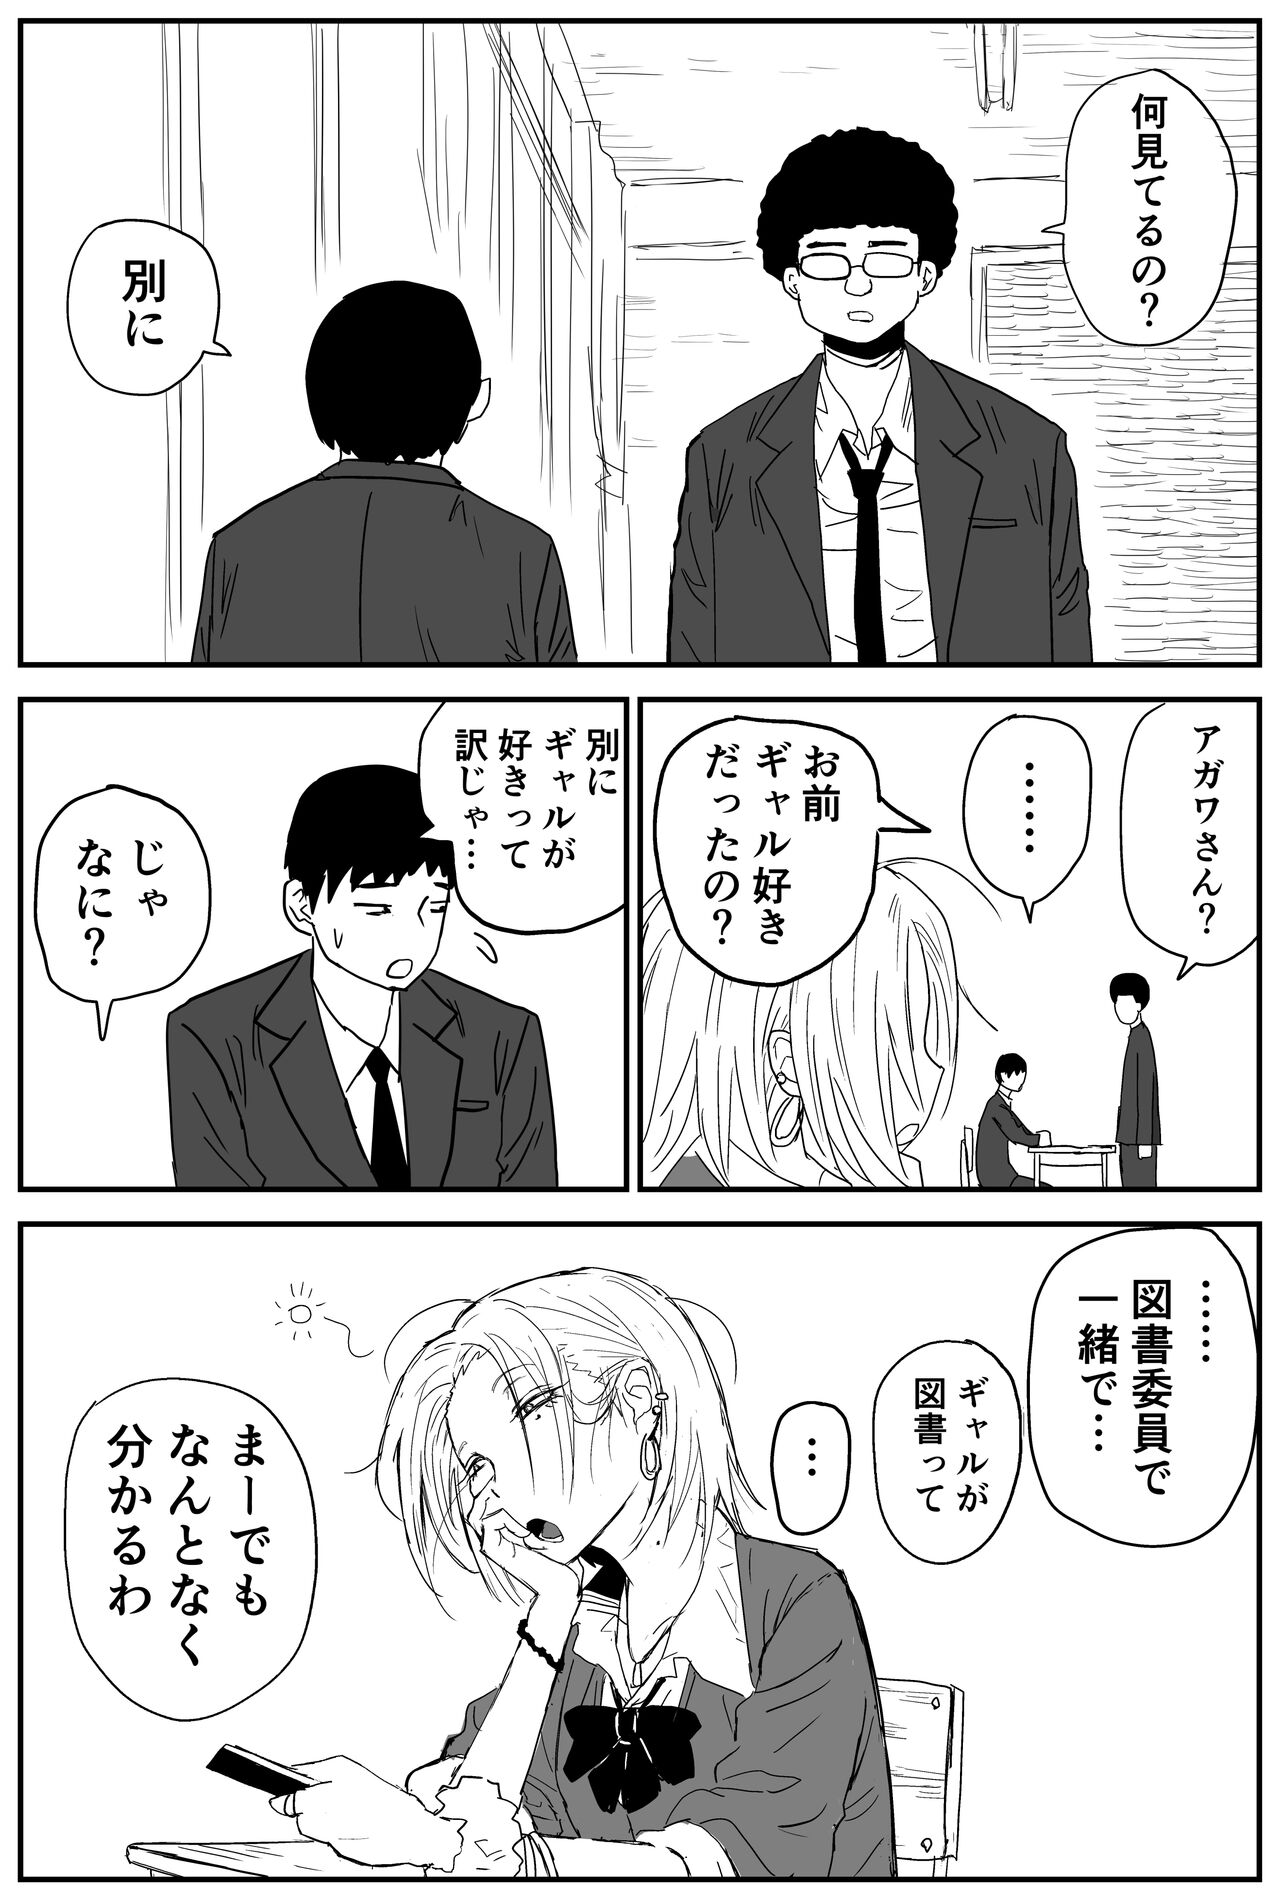 Gal JK Ero Manga Ch.1-27 - Page 4 - HentaiRox